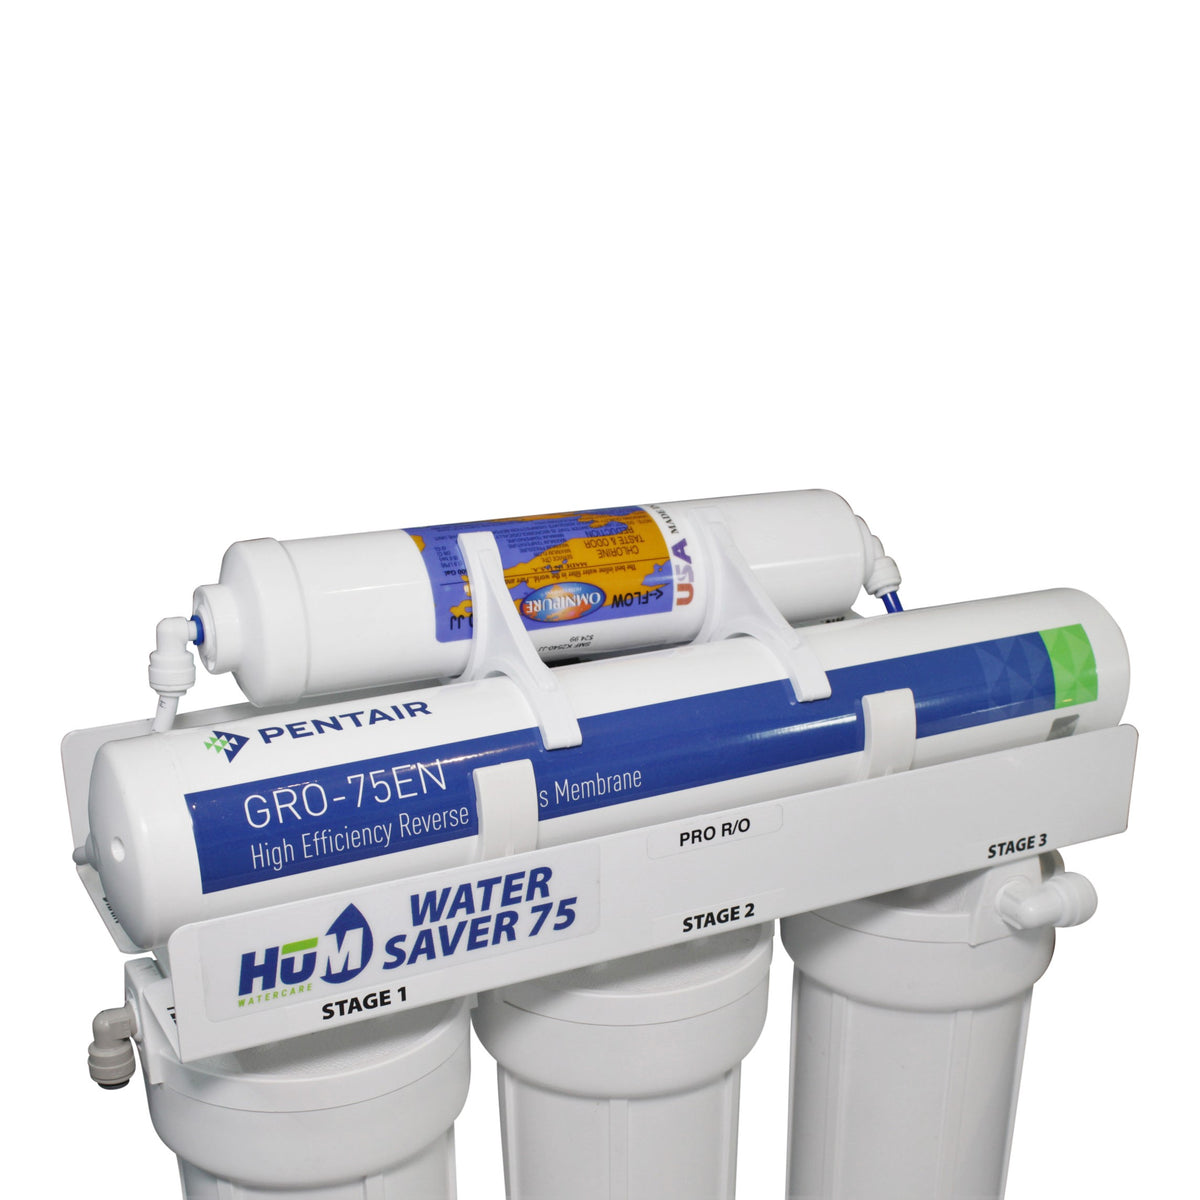 HUM Water Saver 75 Reverse Osmosis Chloramine Reduction Top